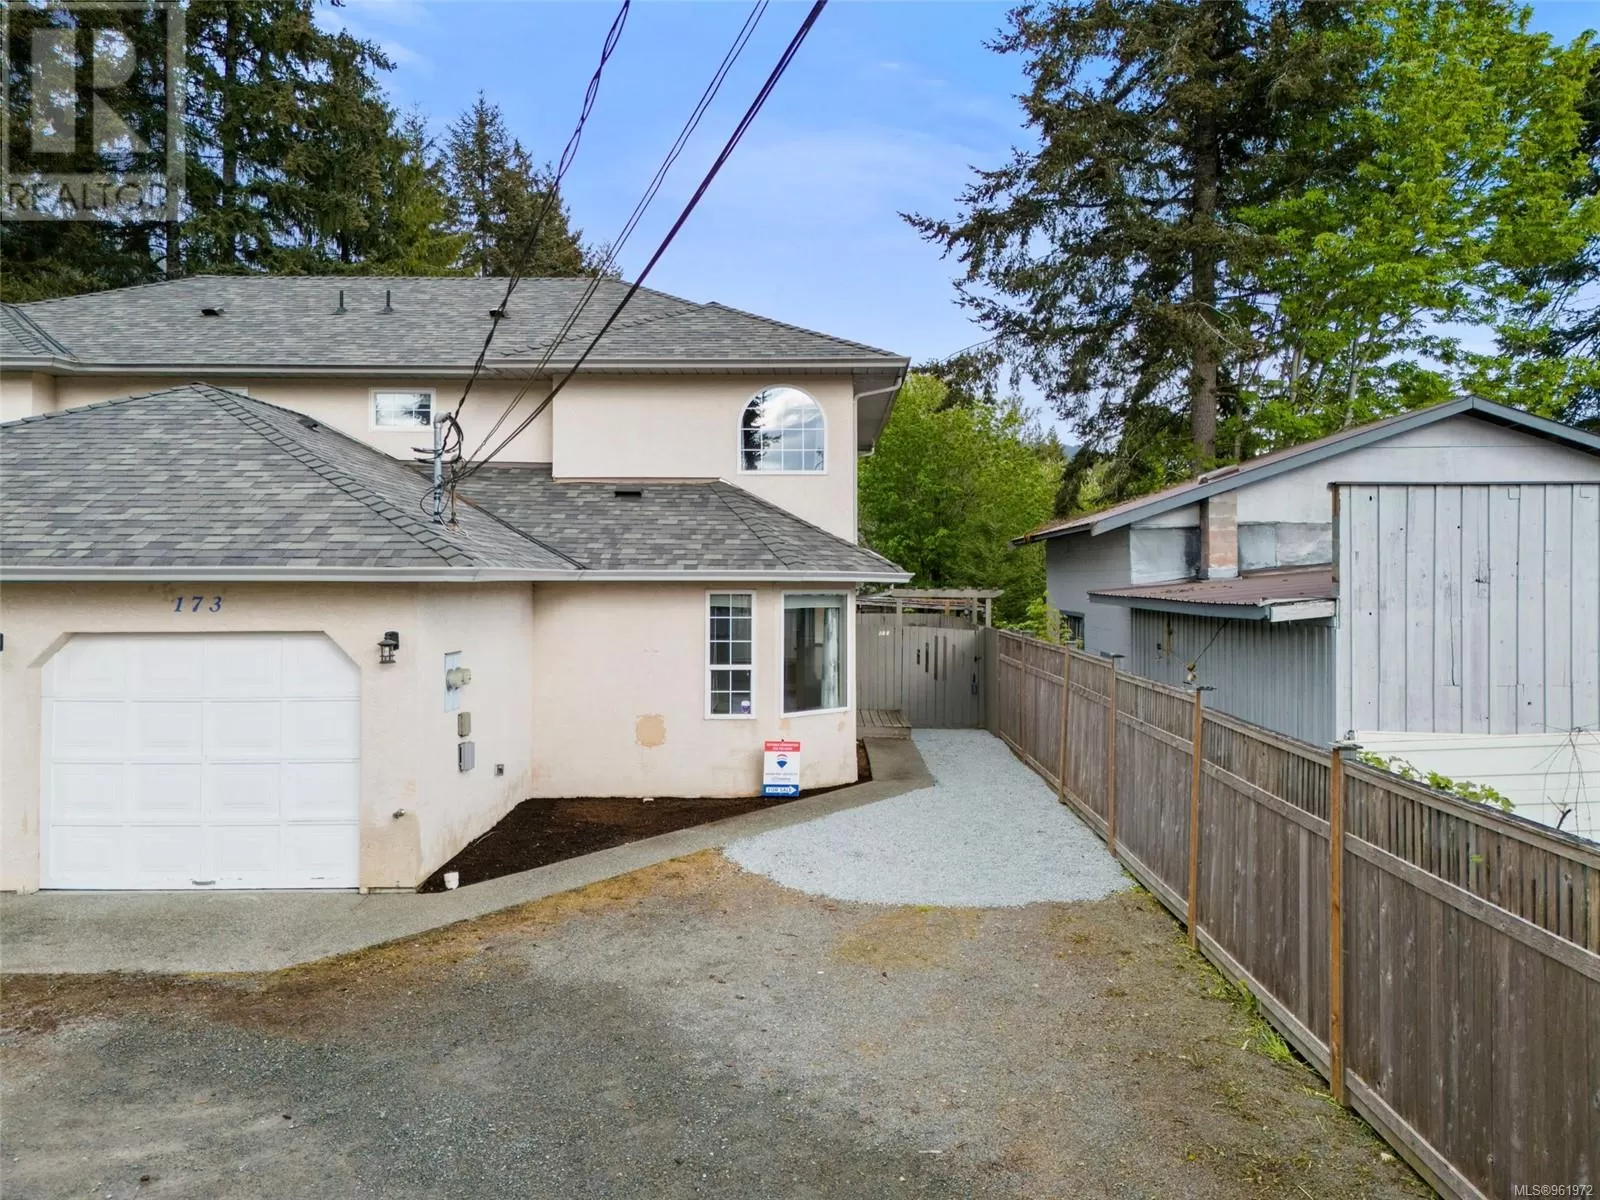 Duplex for rent: 173 Neva Rd, Lake Cowichan, British Columbia V0R 2G0